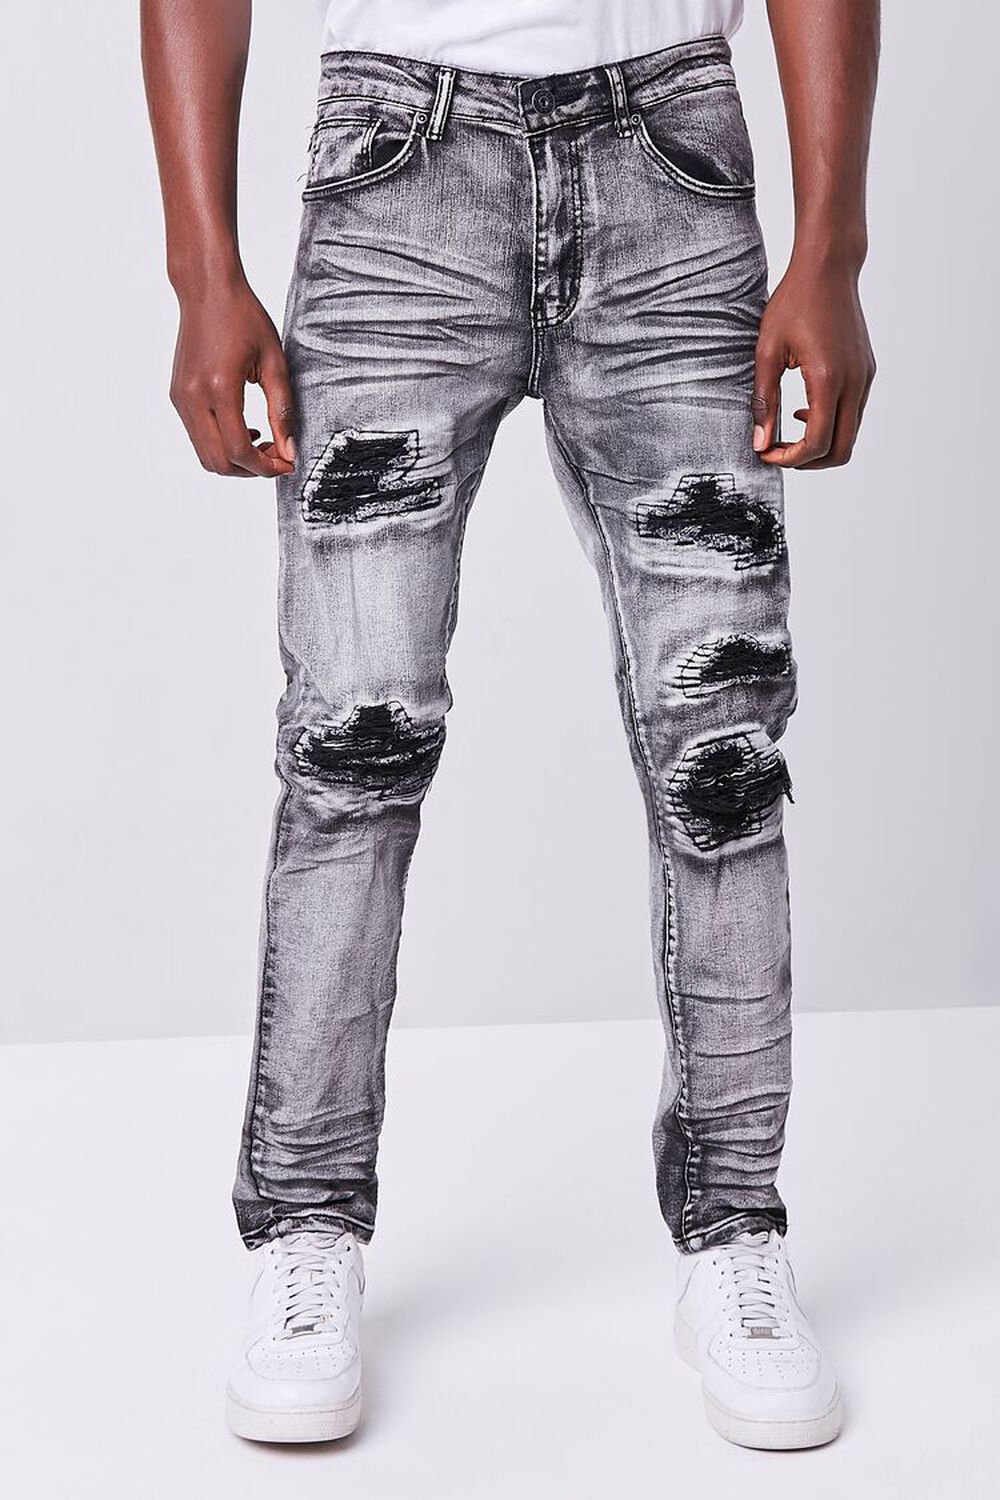 WASHED BLACK Waimea Distressed Weatherbeaten Jeans, image 2